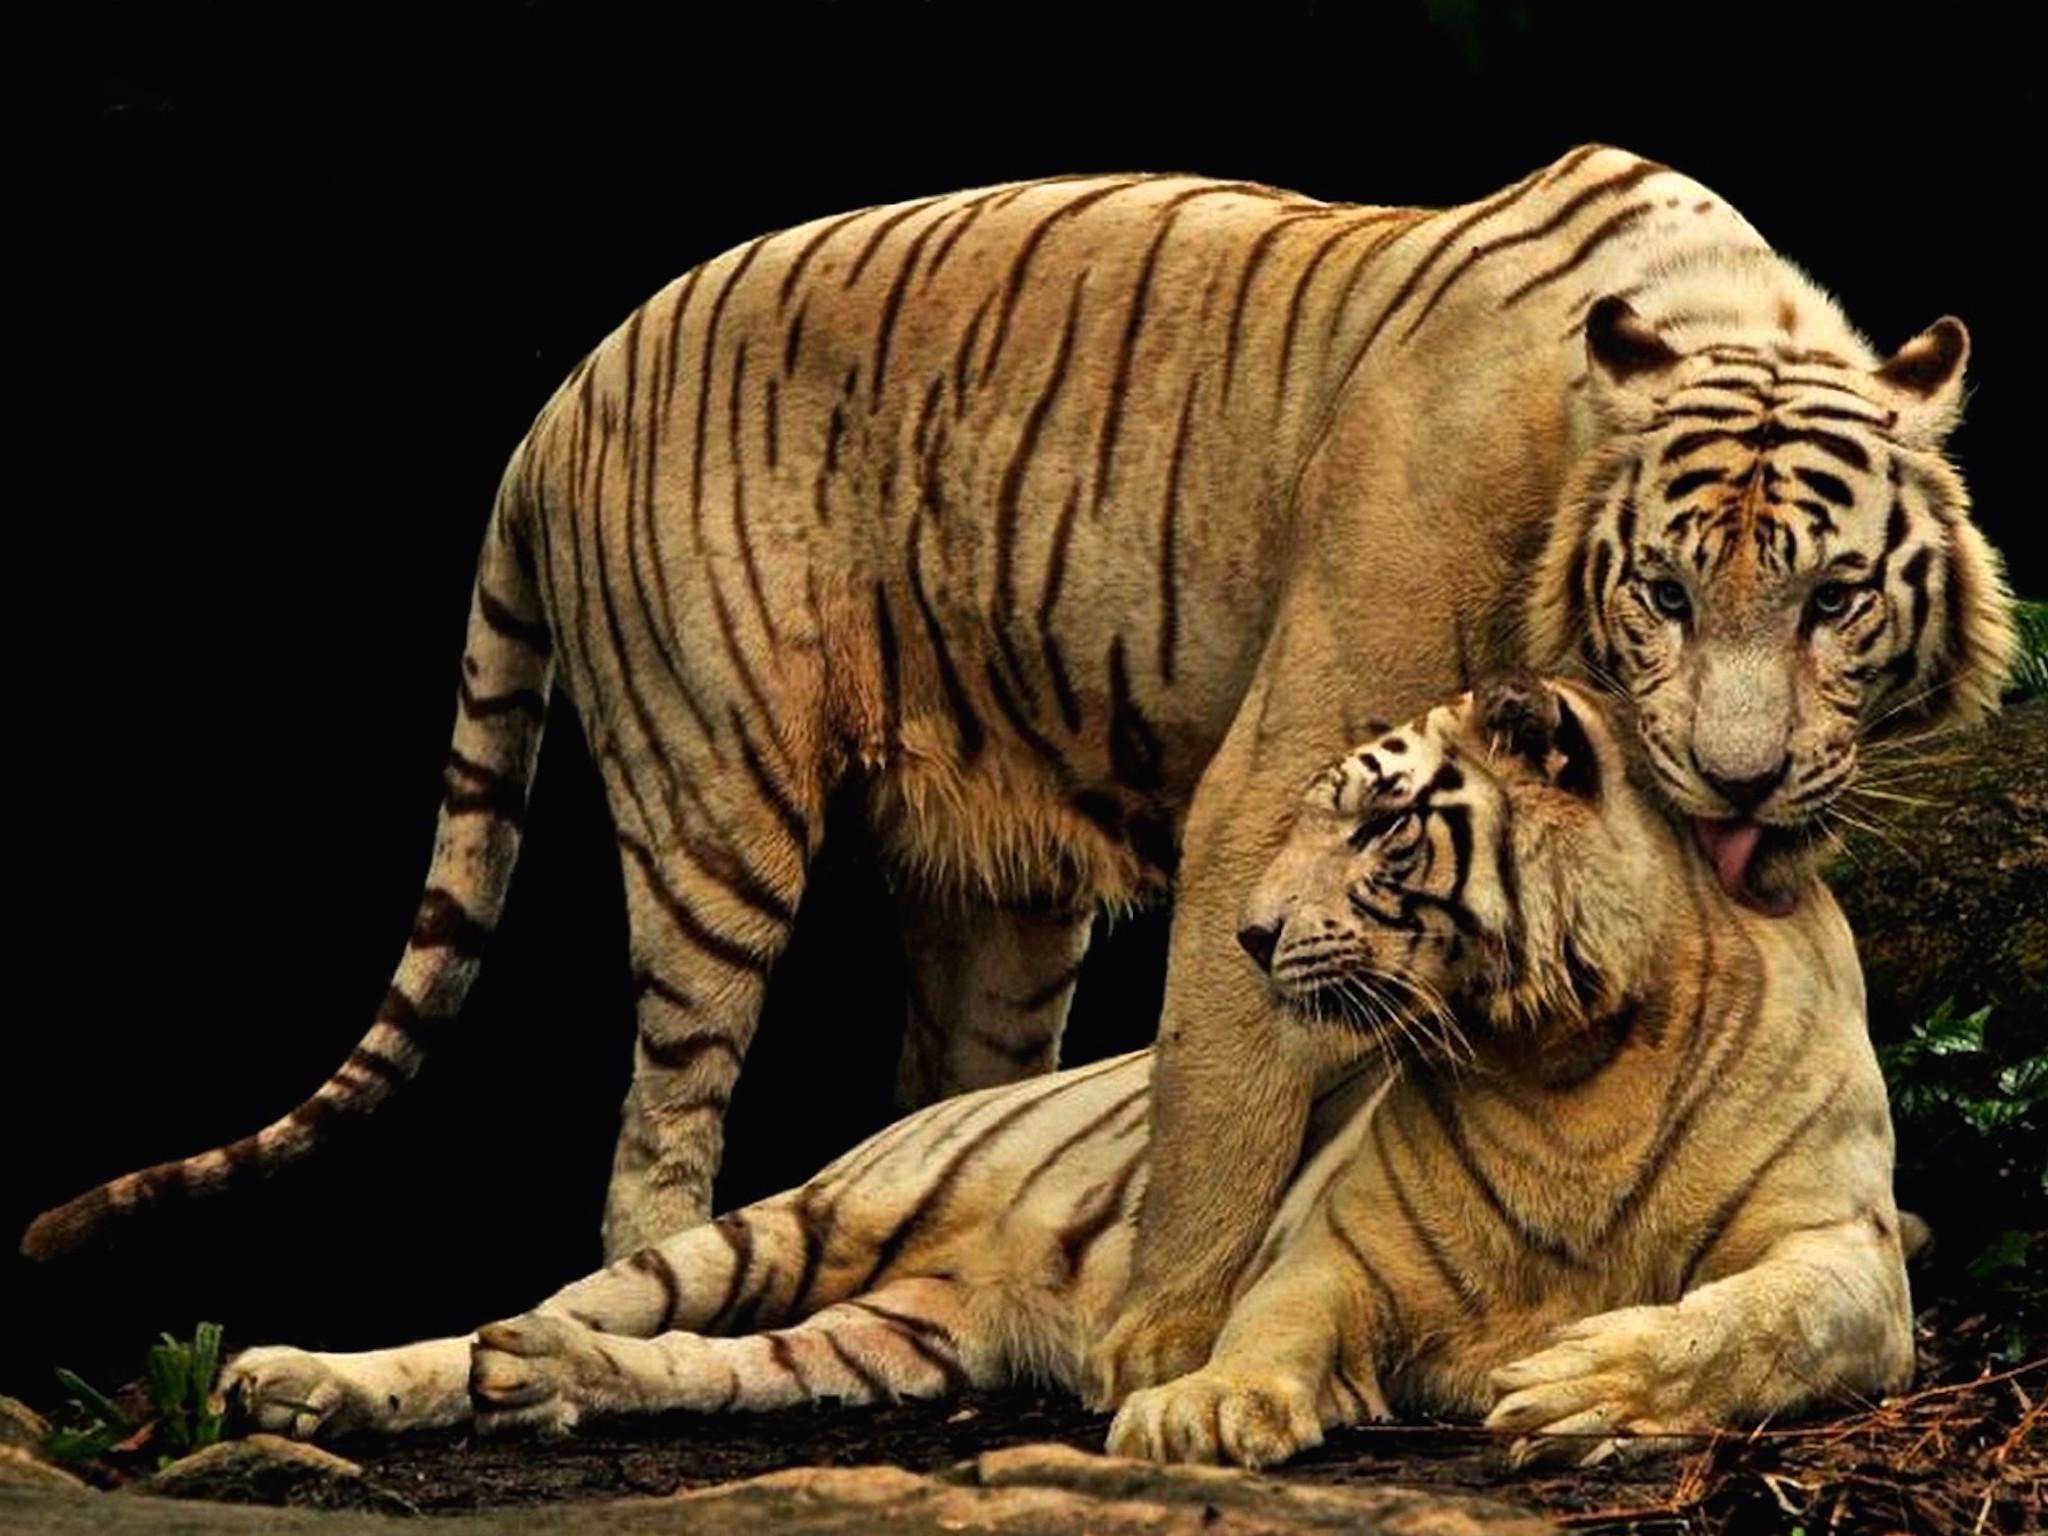 Tiger Motherliness Wallpaper. Free HD Tiger Downloads